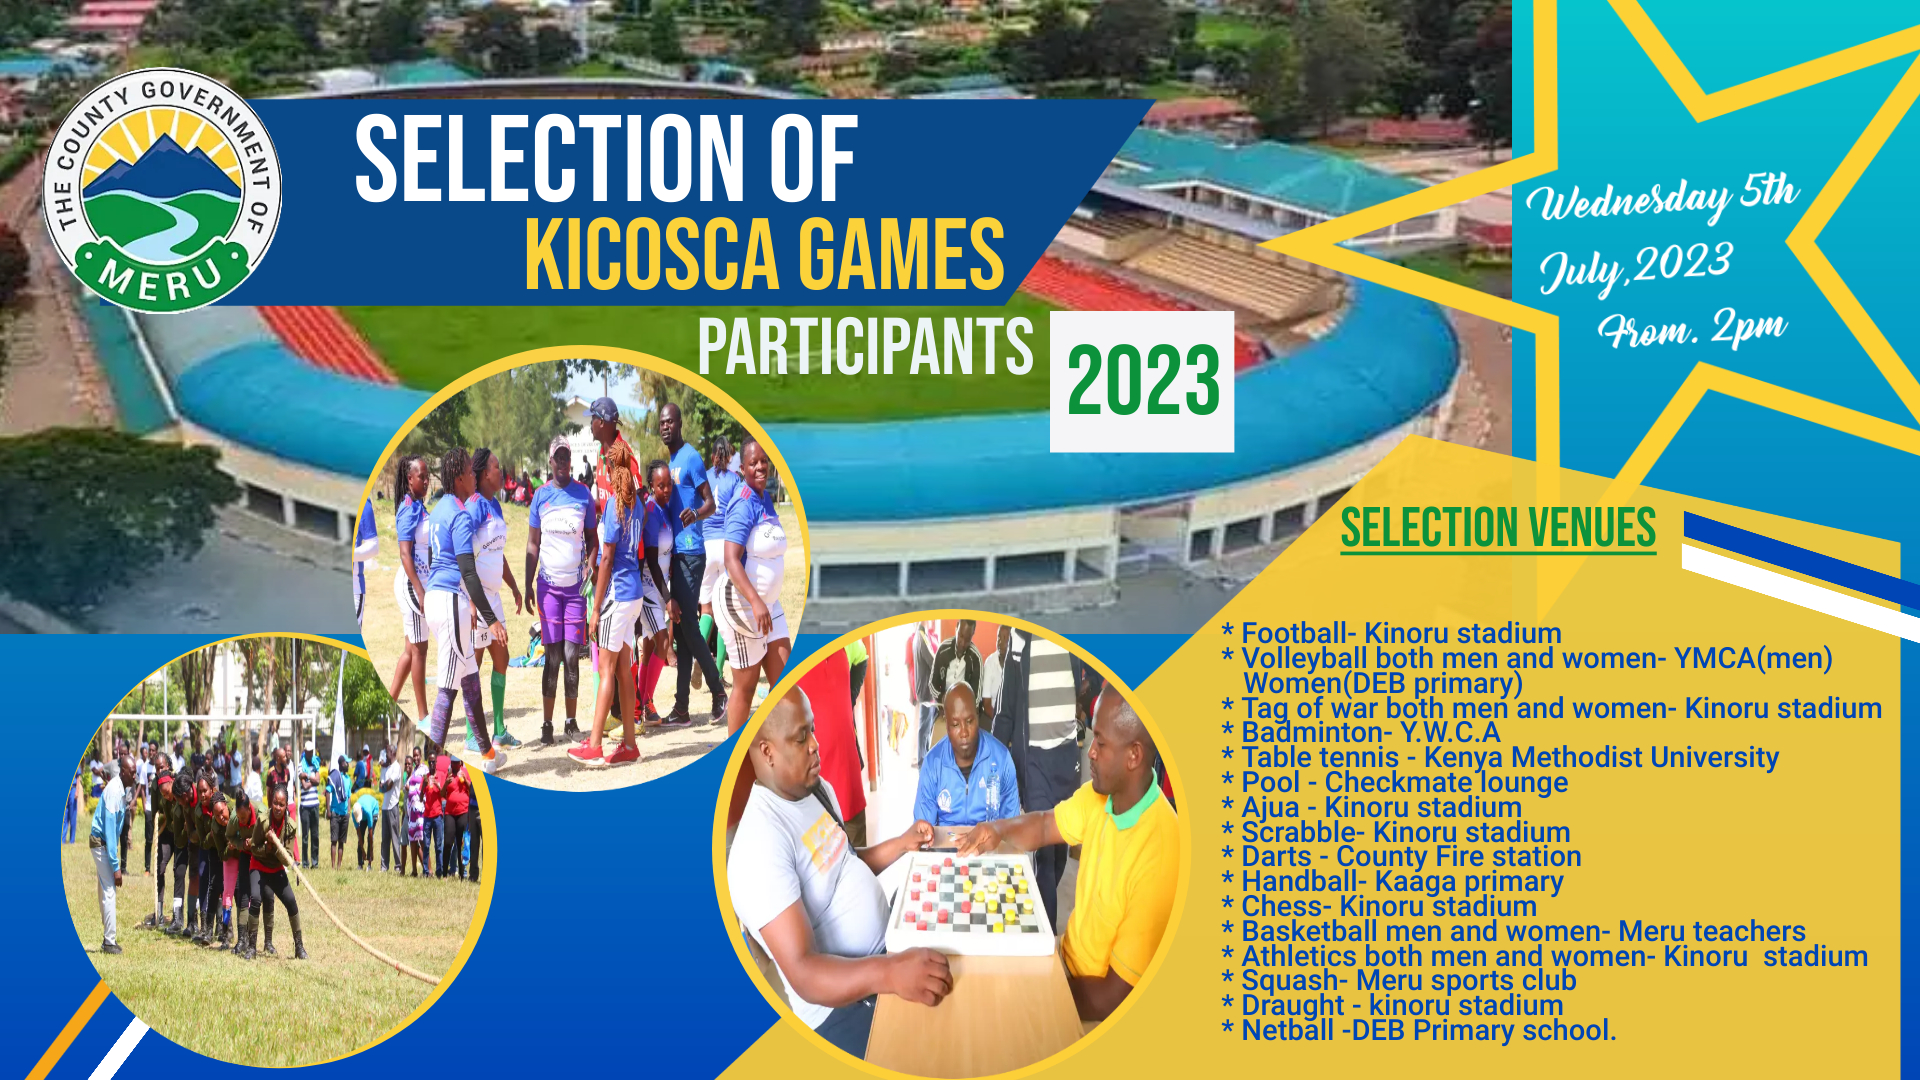 SELECTION OF KICOSCA GAMES PARTICIPANTS 2023